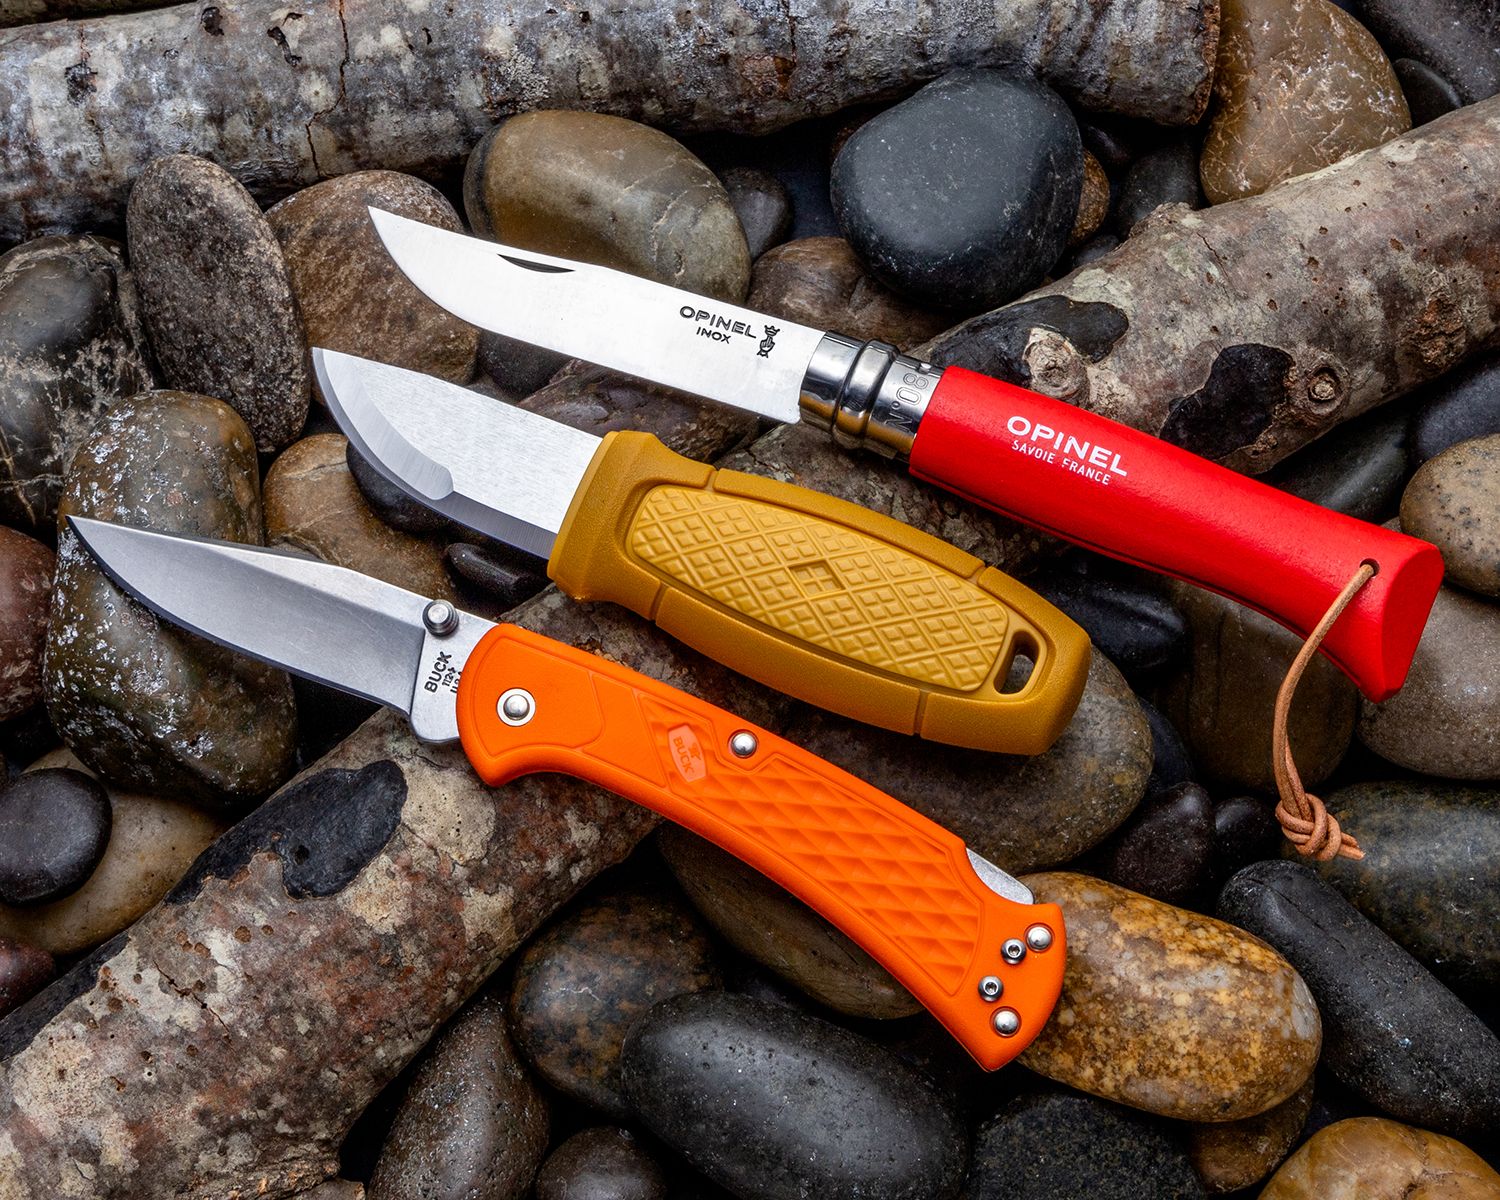  Buck Knives 112 Ranger Lock-back Knife, Brass Bolsters, Ebony  Handles, 3 420HC Blade with Leather Sheath : Hunting Folding Knives :  Sports & Outdoors